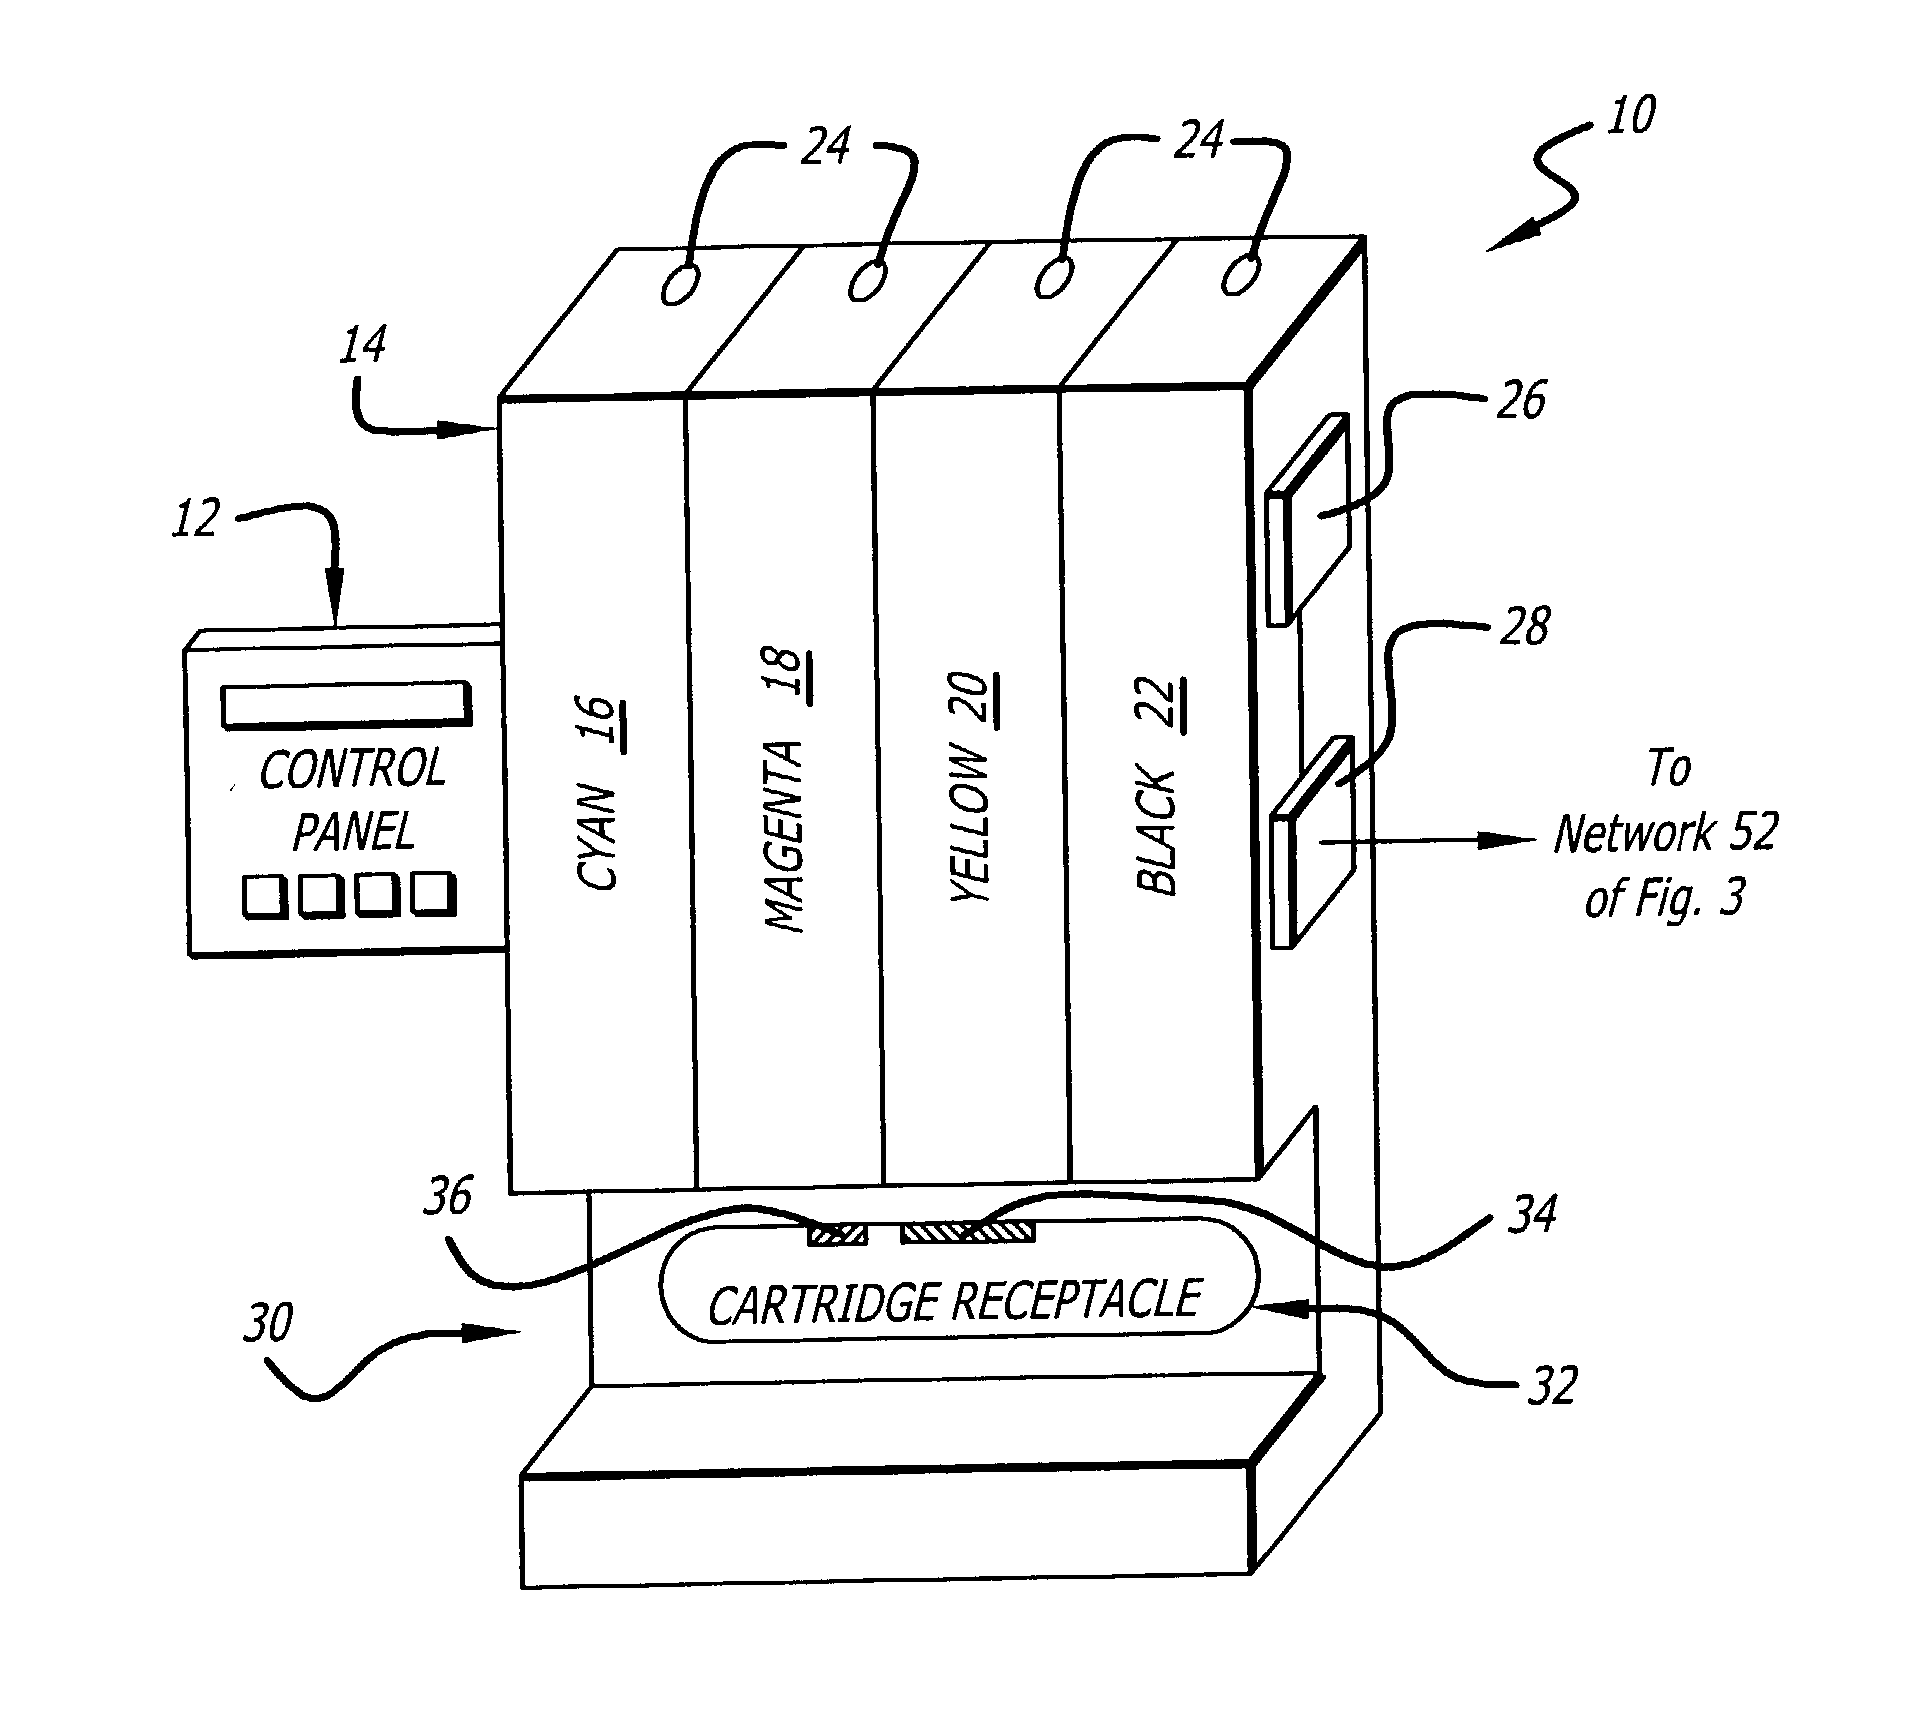 System and method for filling a reservoir